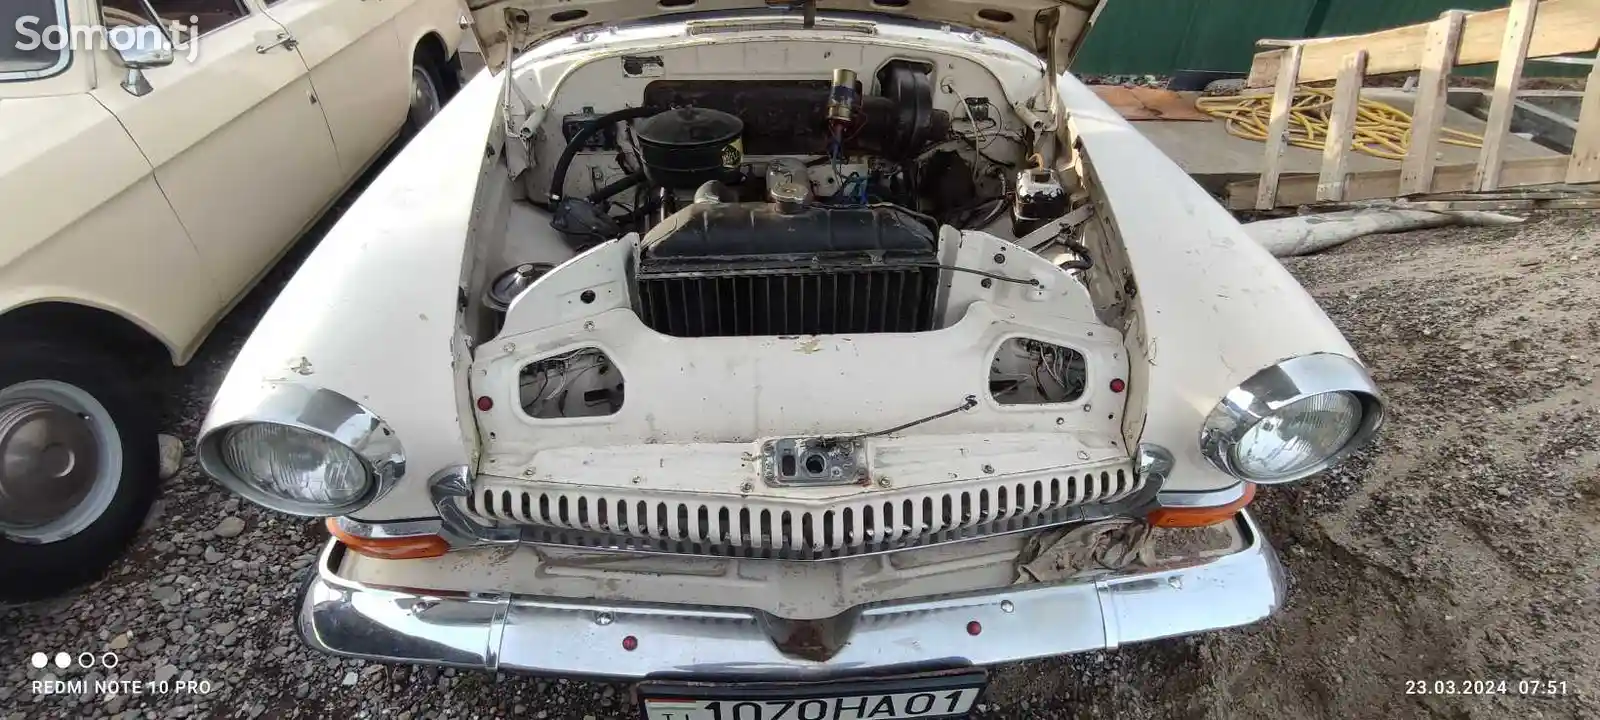 ГАЗ 21, 1961-12